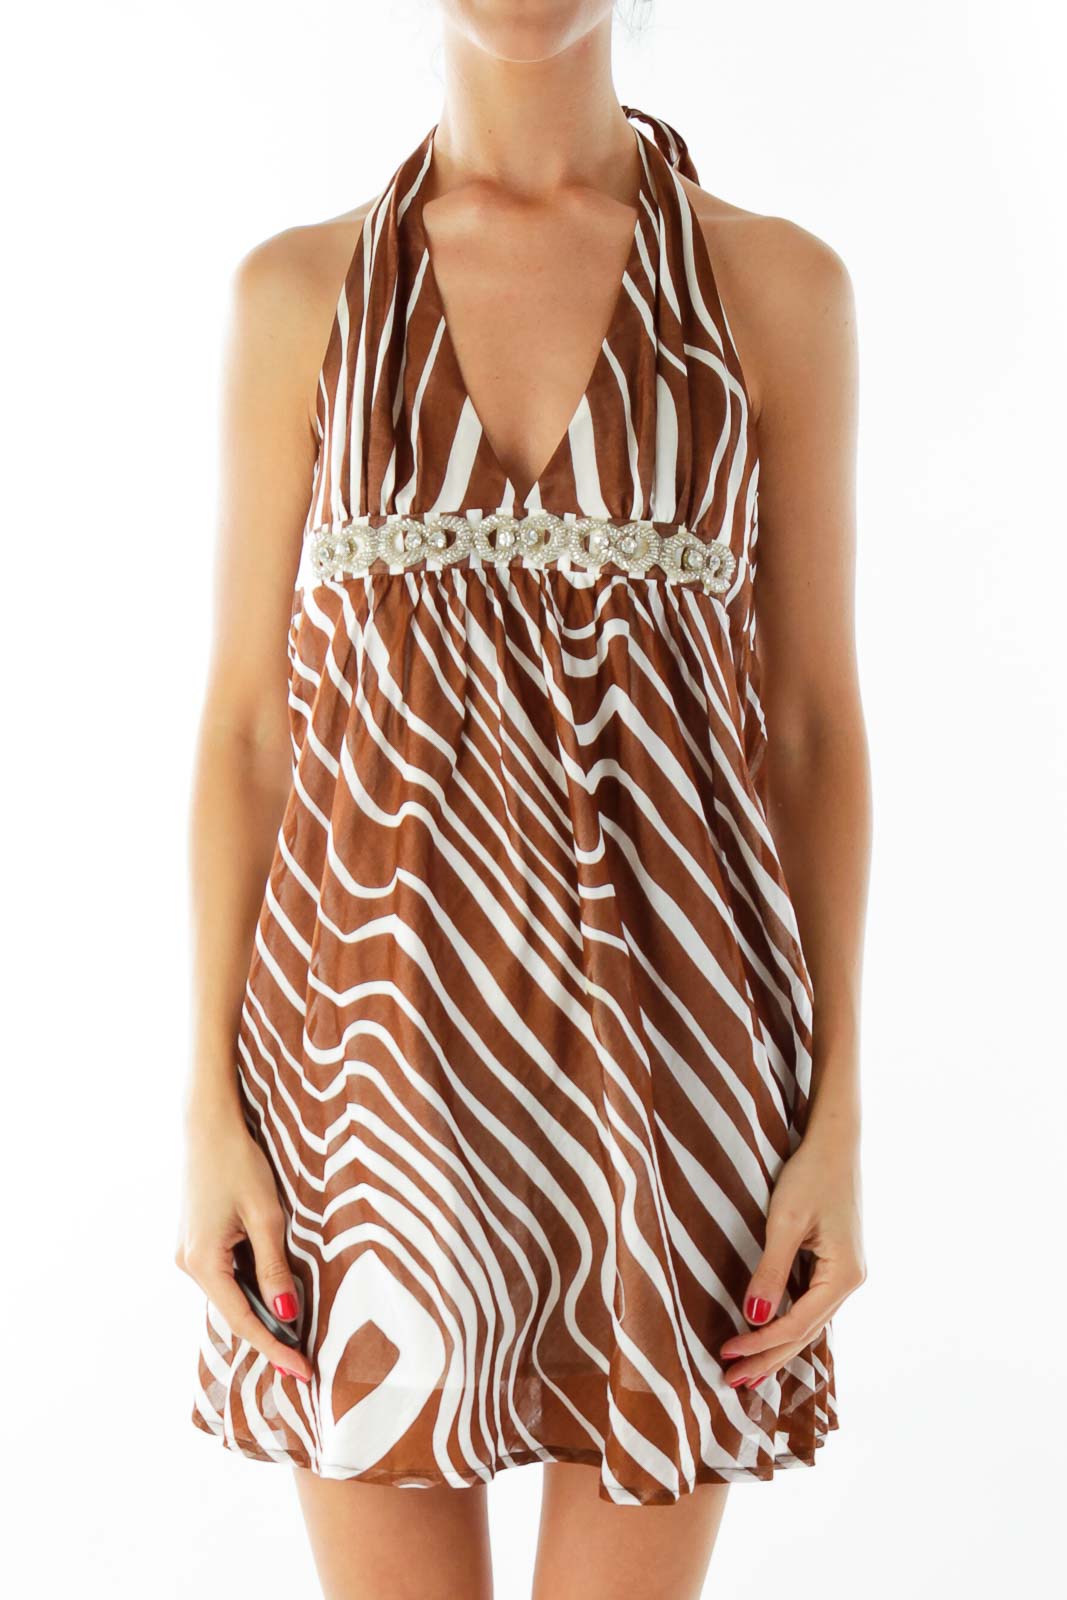 Brown Creme Zebra Print Halter Dress Front